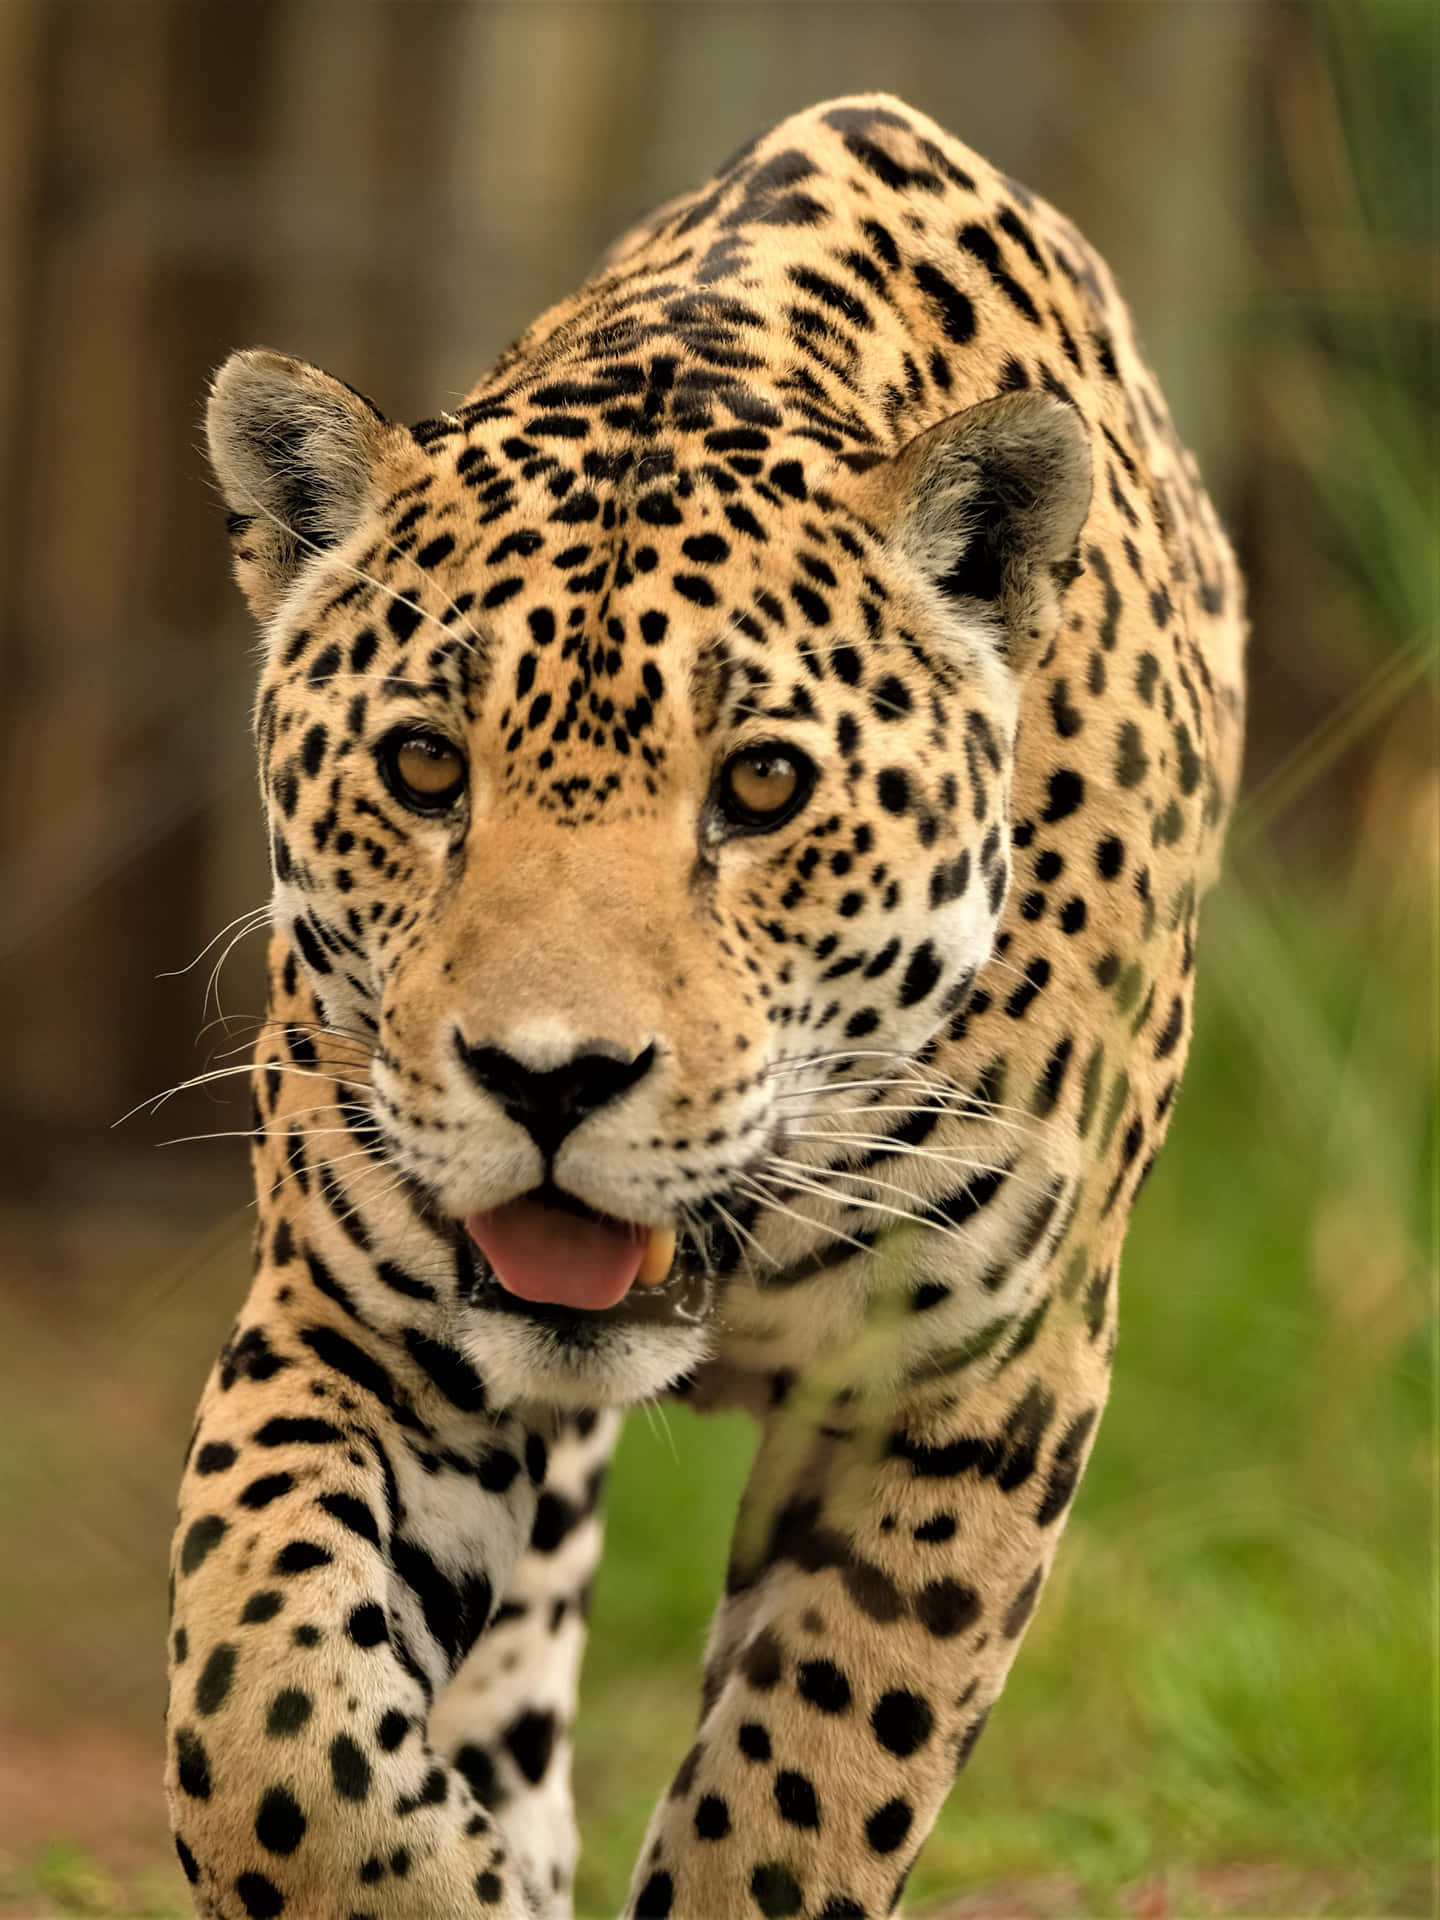 Imponentey Elegante, El Jaguar.